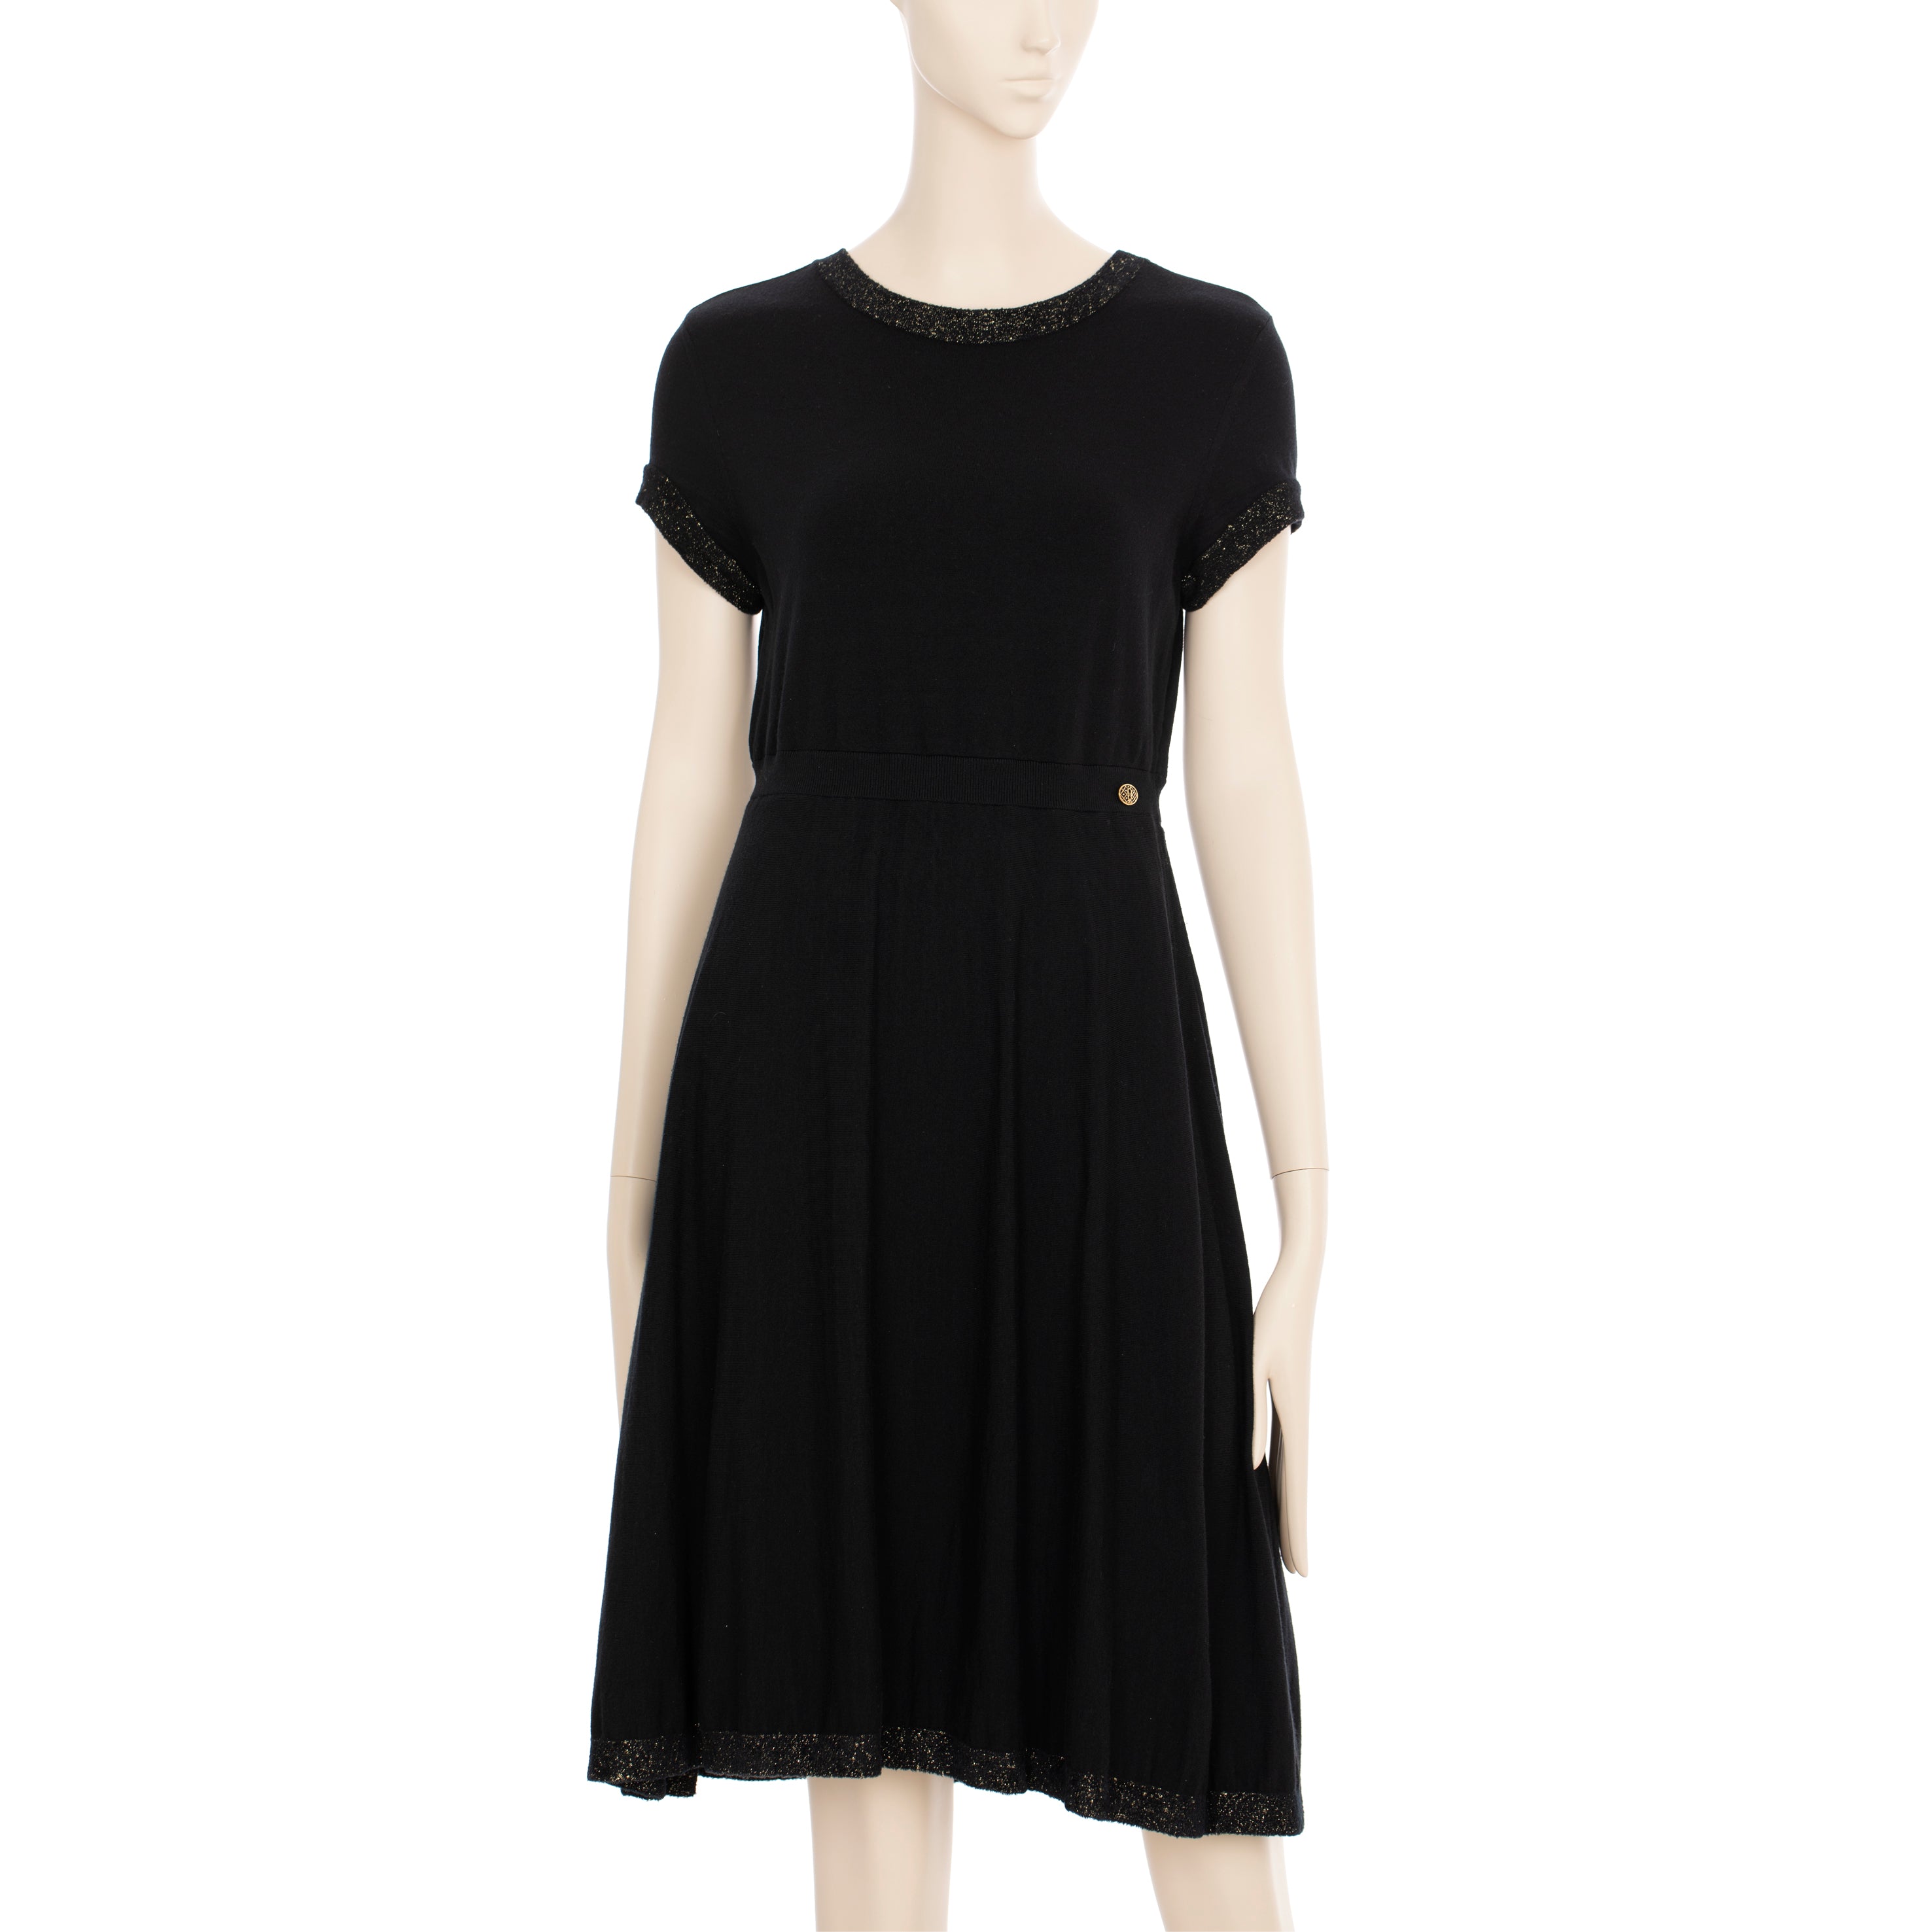 Chanel Knit Black Dress 38 FR